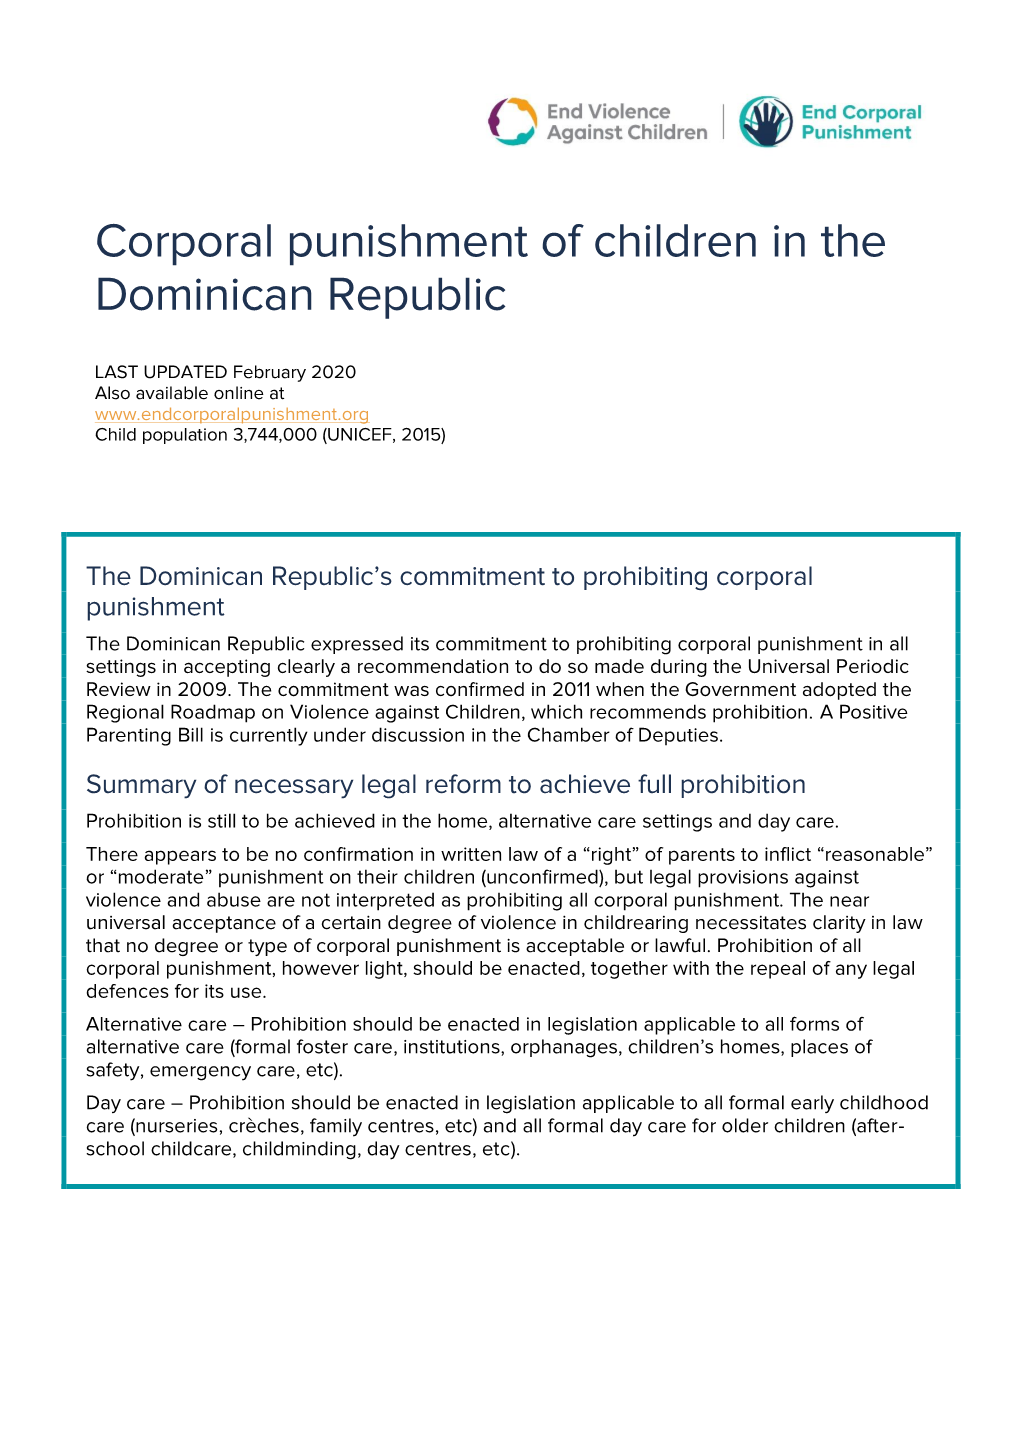 Corporal Punishment of Children in the Dominican Republic